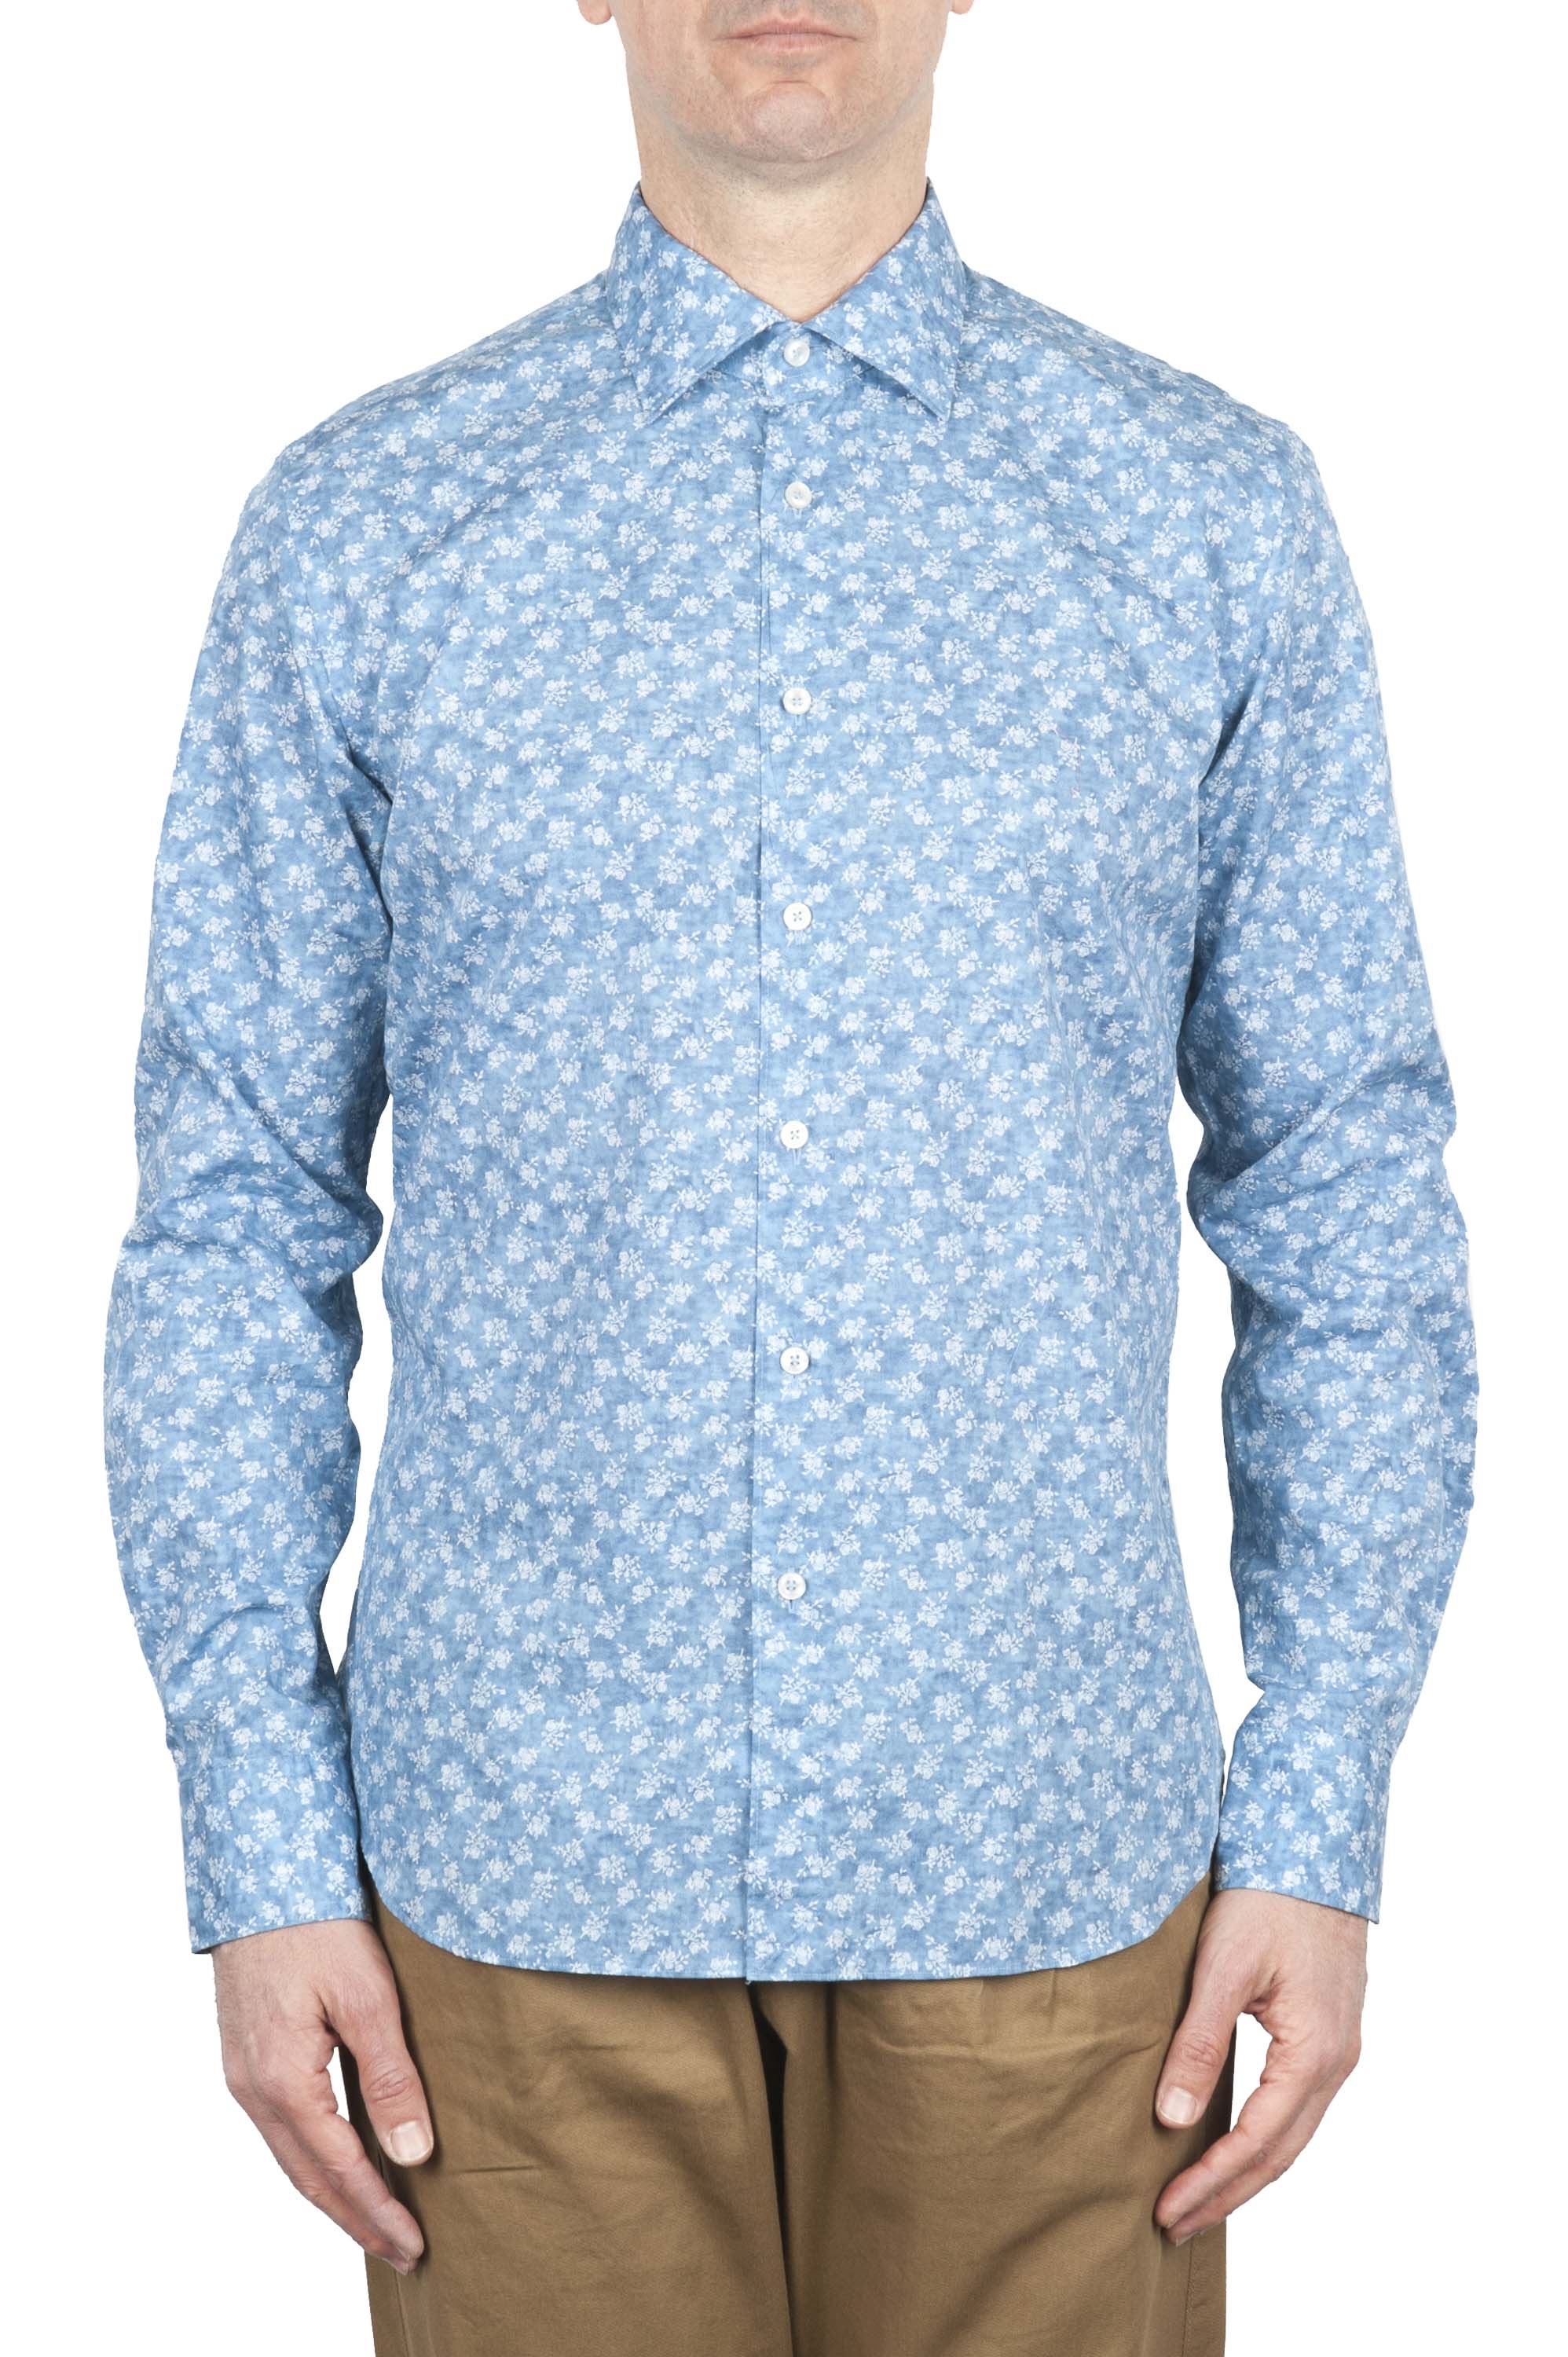 SBU 01601 Floral printed pattern light blue cotton shirt 01